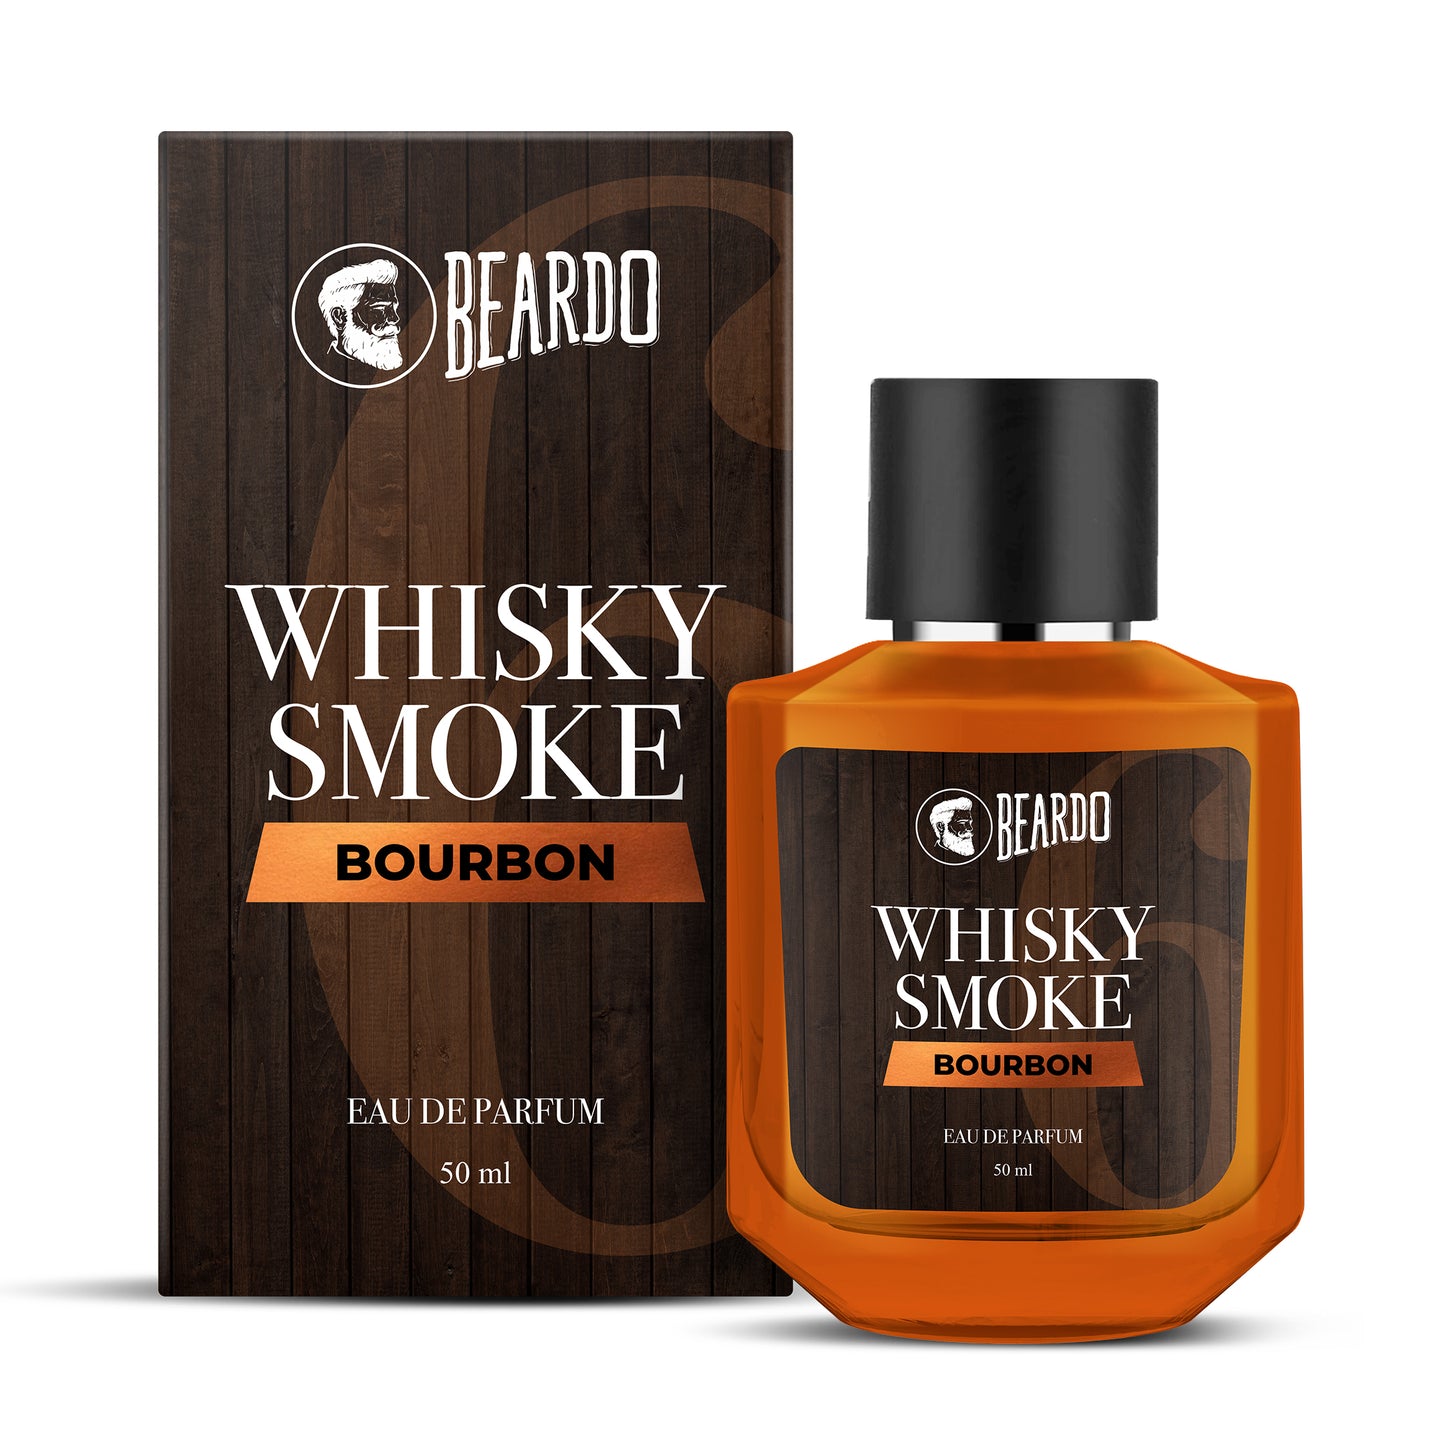 Beardo WS Bourbon & Godfather Perfume EDP Combo